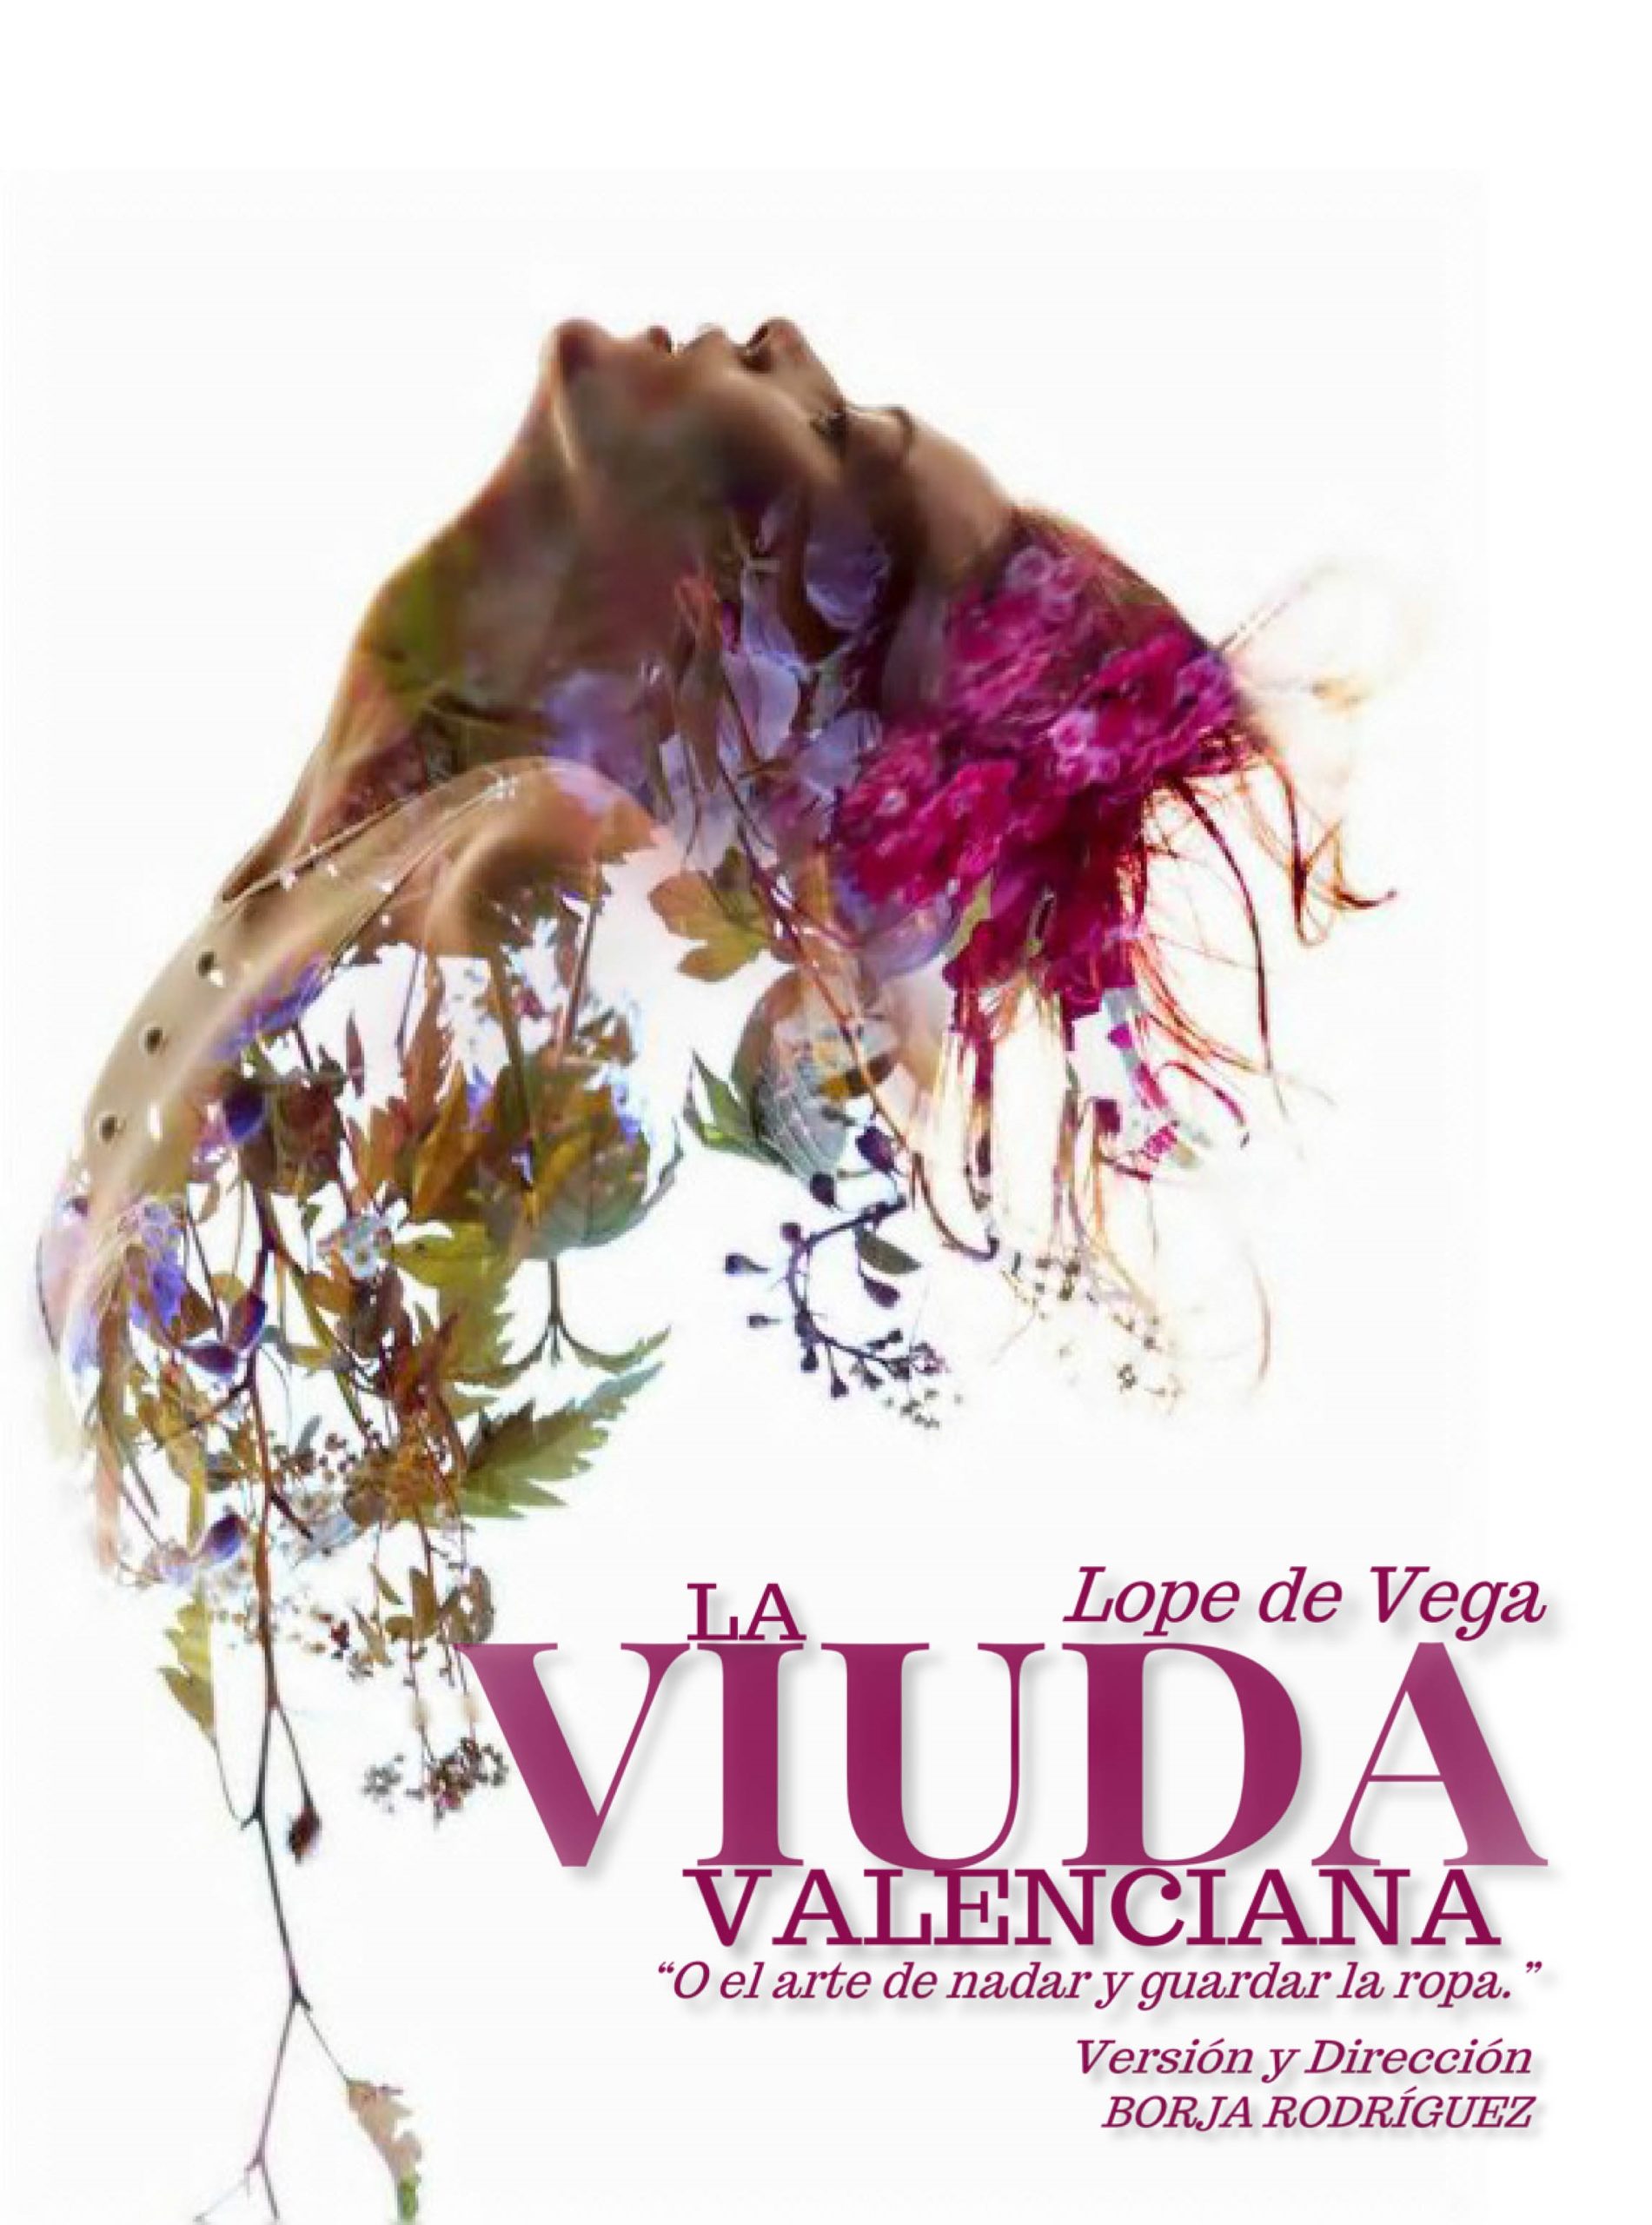 La viuda valenciana de Lope de Vega en el Romea